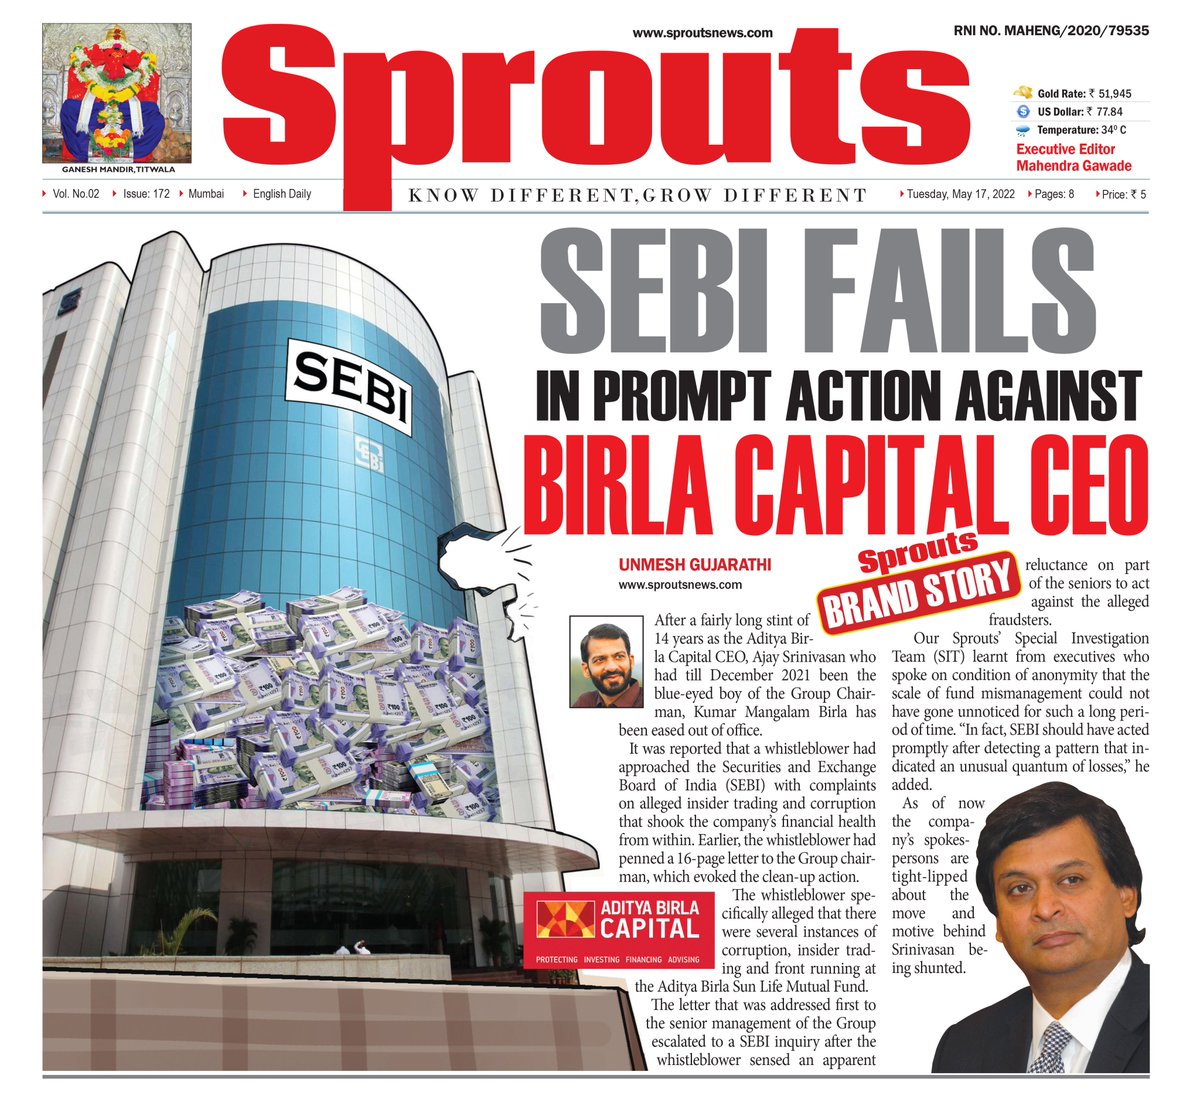 SEBI fails in prompt action against Birla Capital CEO  
bit.ly/3sF8rVw #UnmeshGujajarathi #sproutsnews #SEBI #birlacapital  @abcapital #BirlaCapital @AAPMumbai @Dhananjay4AAP #KumarMangalamBirla  #AjaySrinivasan @PreetiSMenon